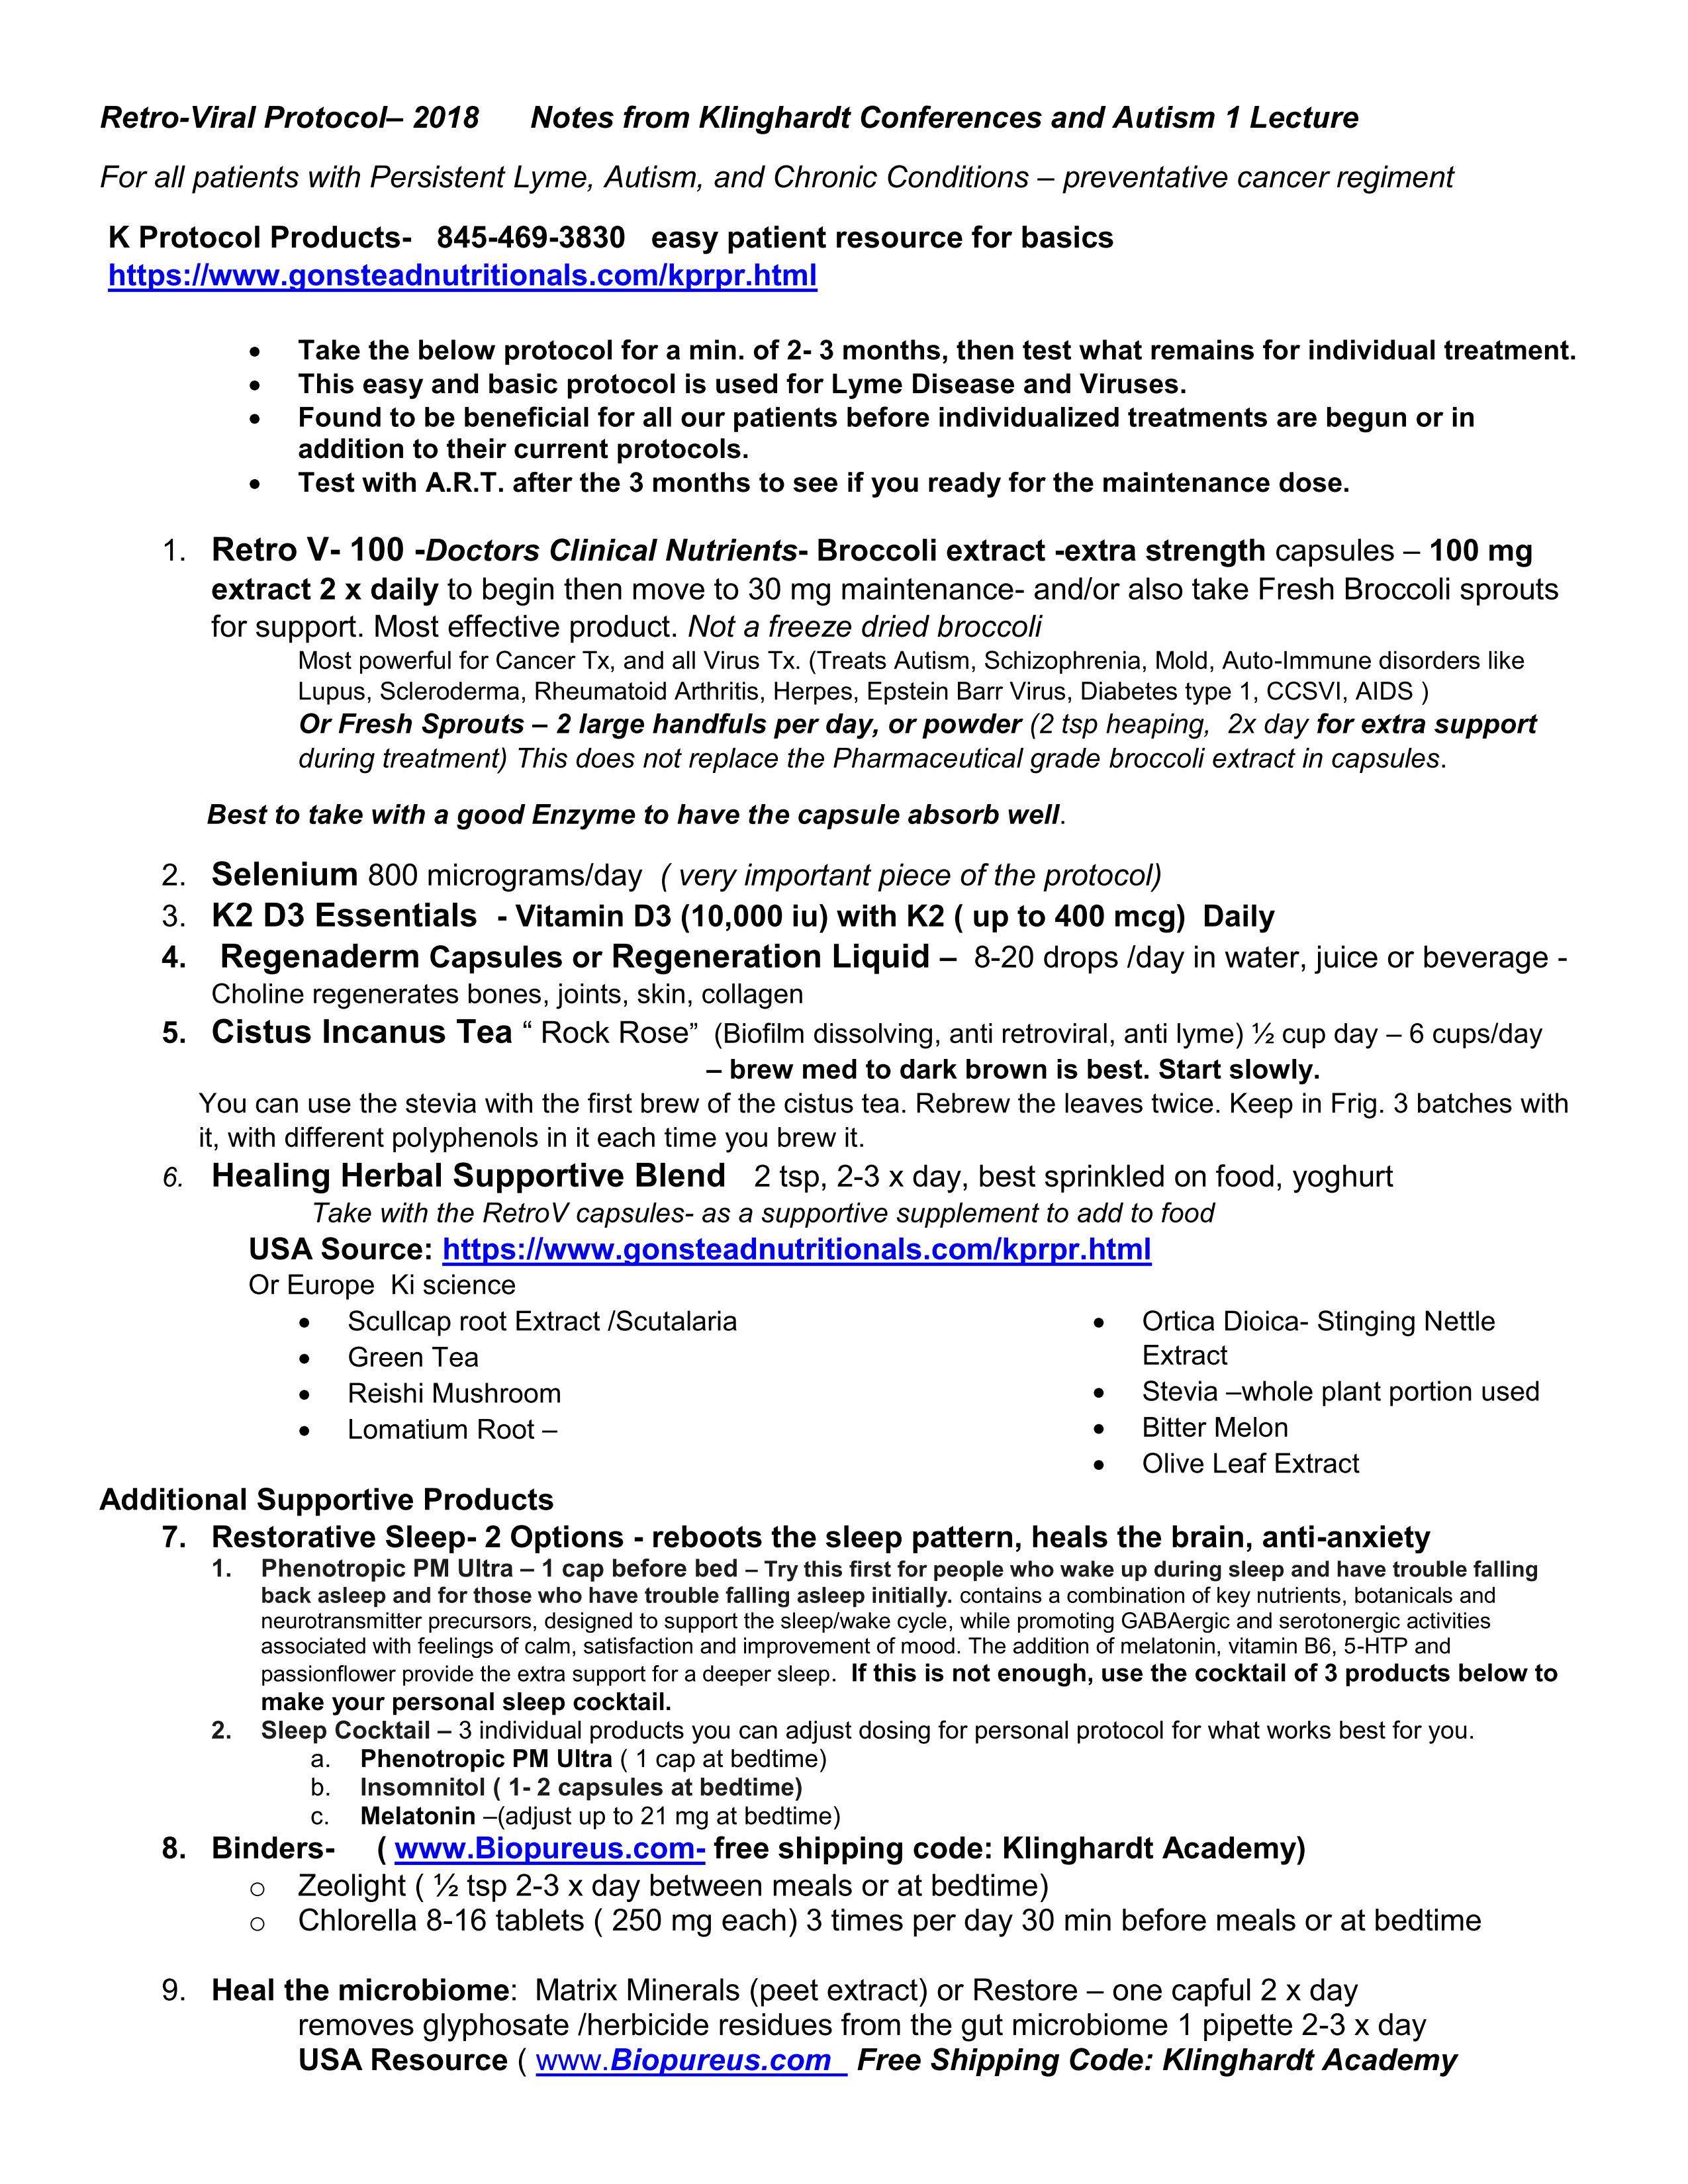 Klinghardt Protocol for Retrovirus, Autism and Lyme page 1